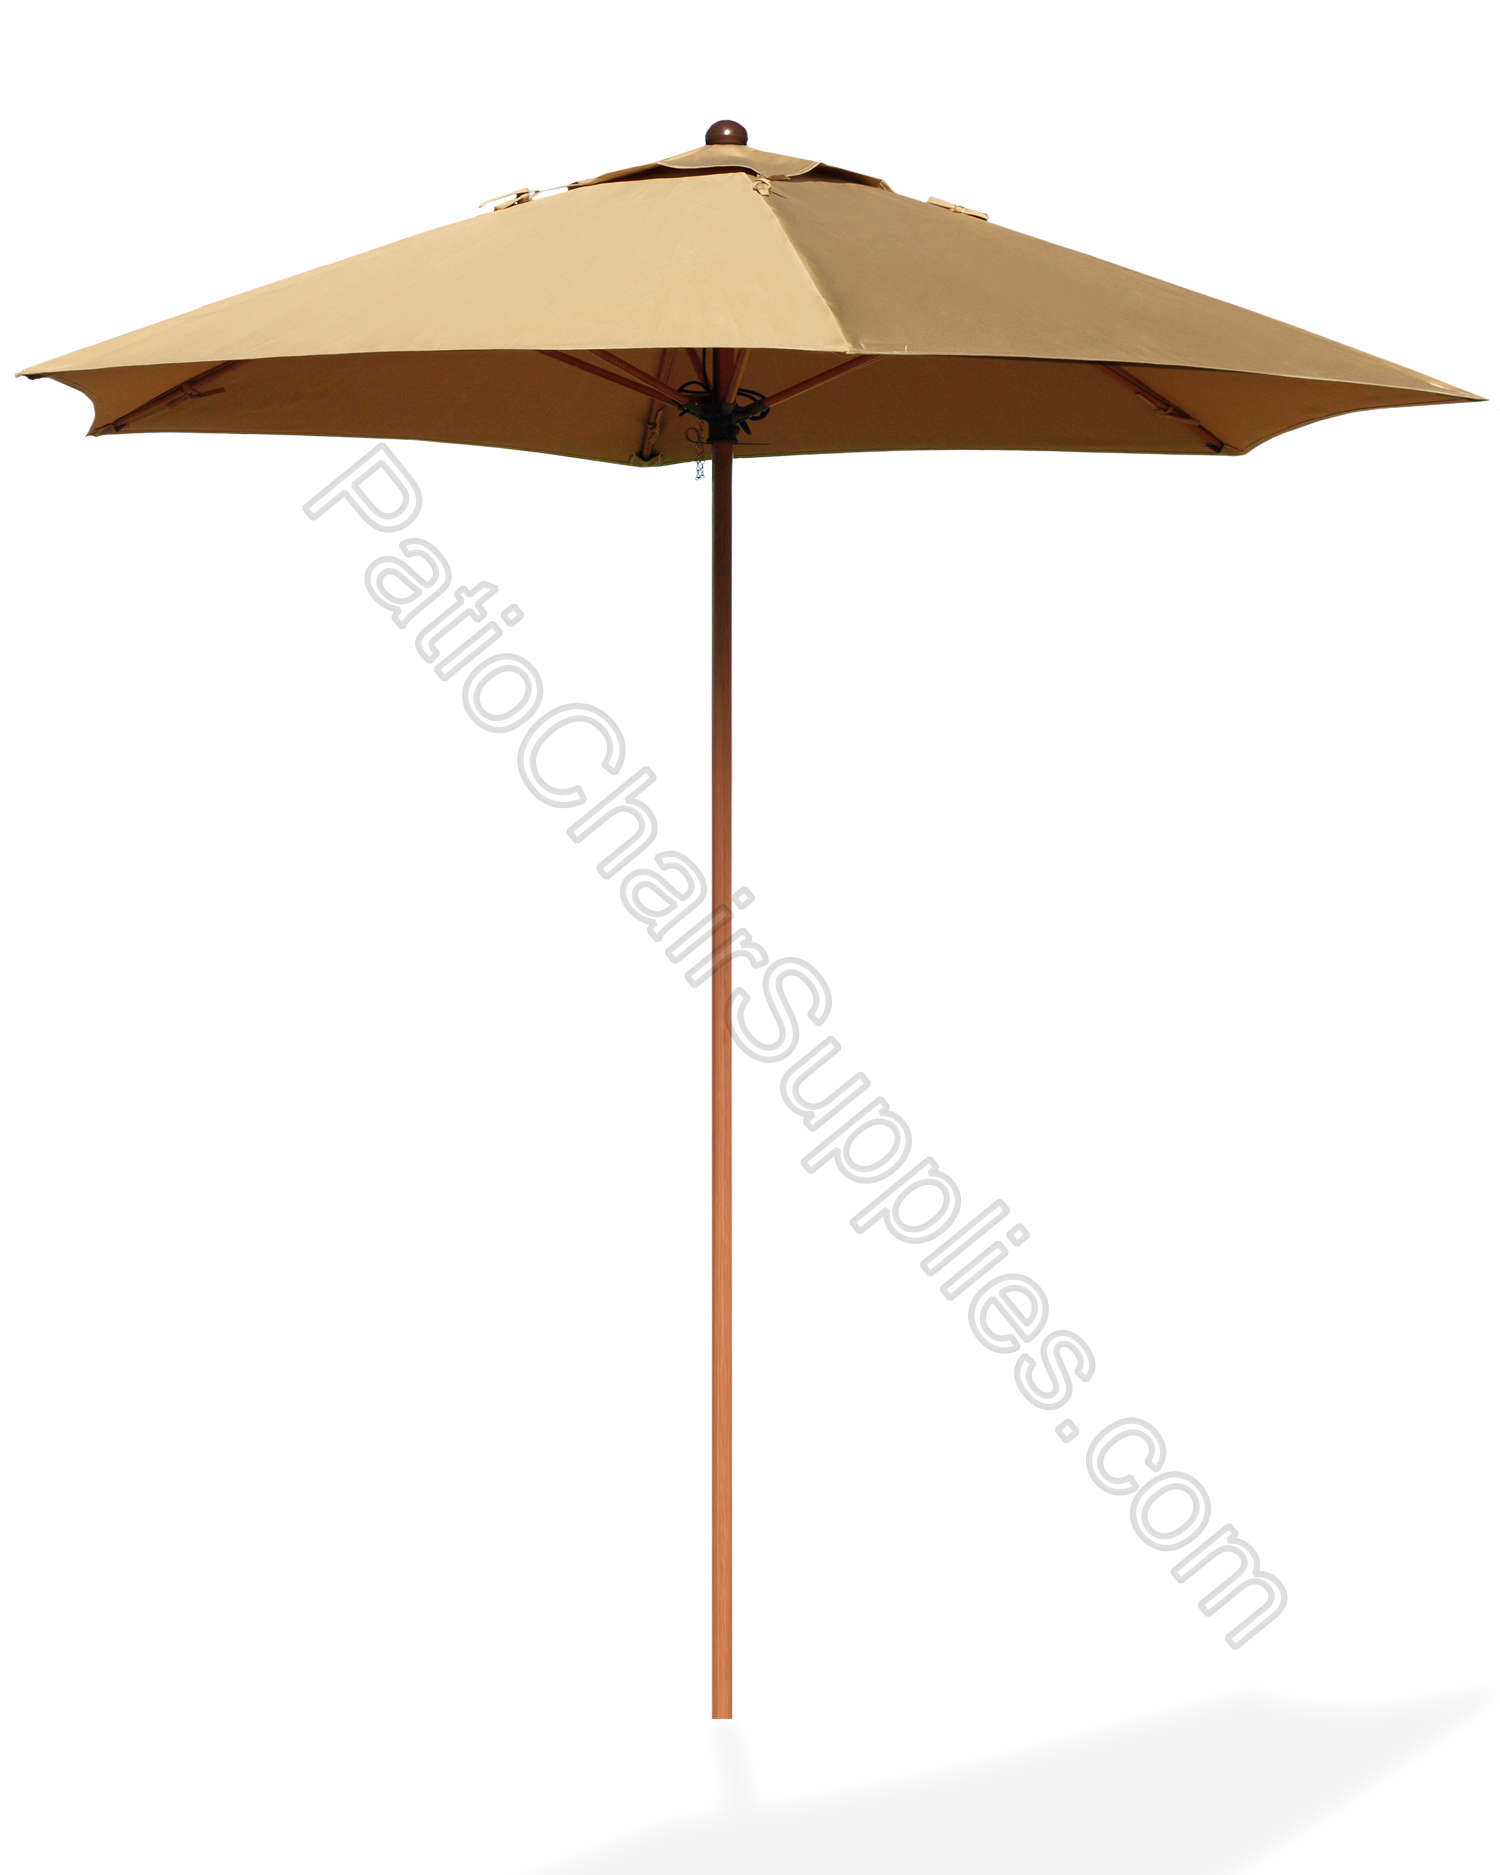 South Beach umbrella